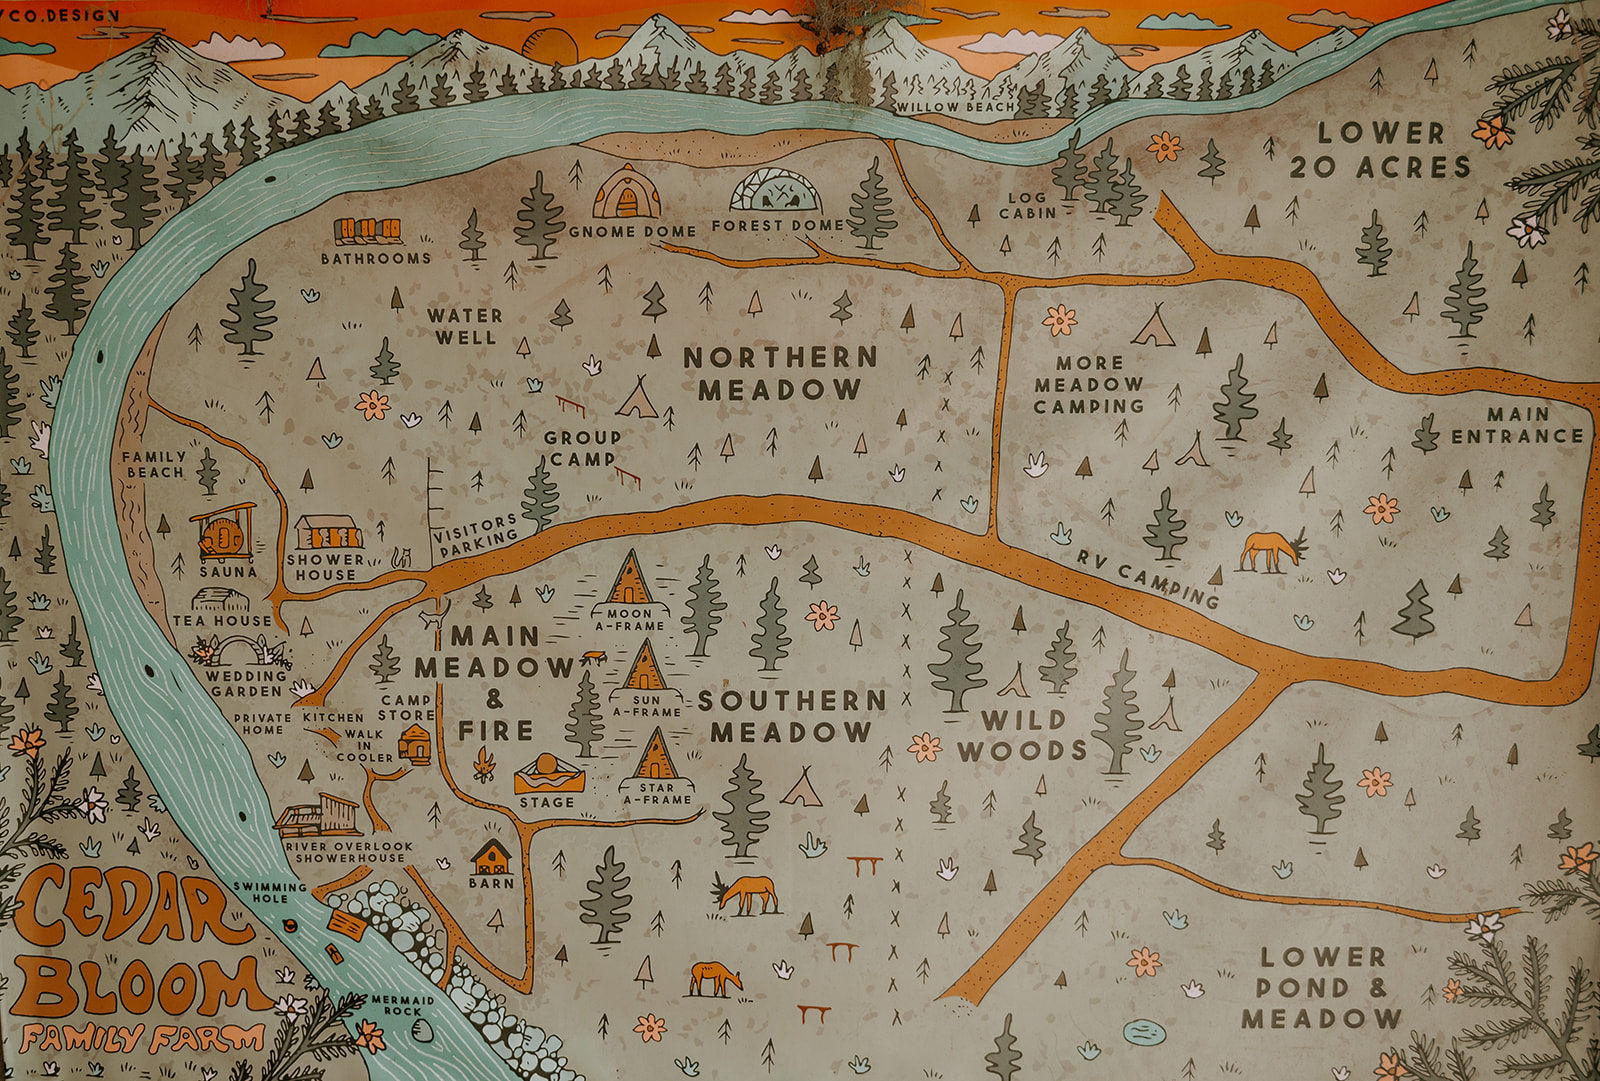 Map of Cedar Bloom Farms in Southern Oregon